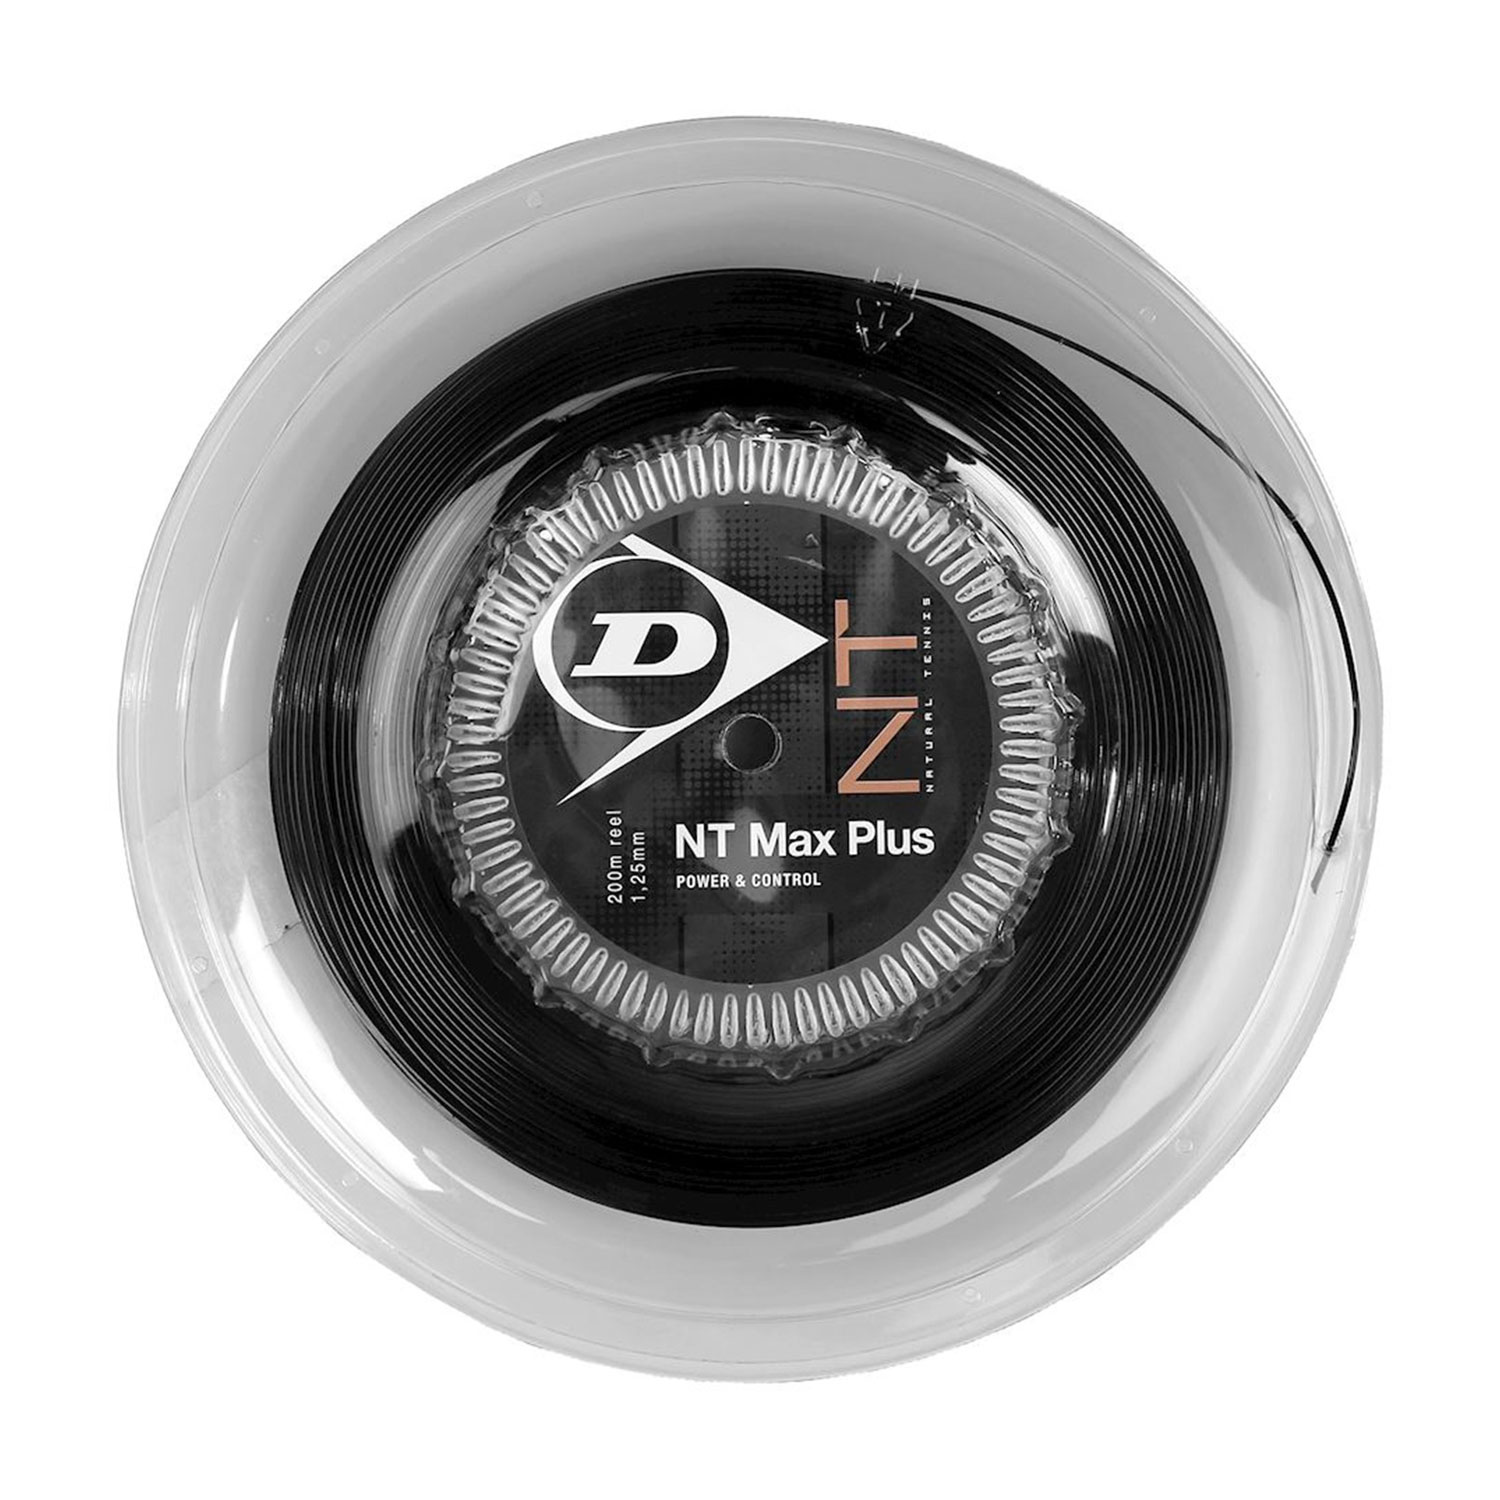 Dunlop NT Max Plus 1.25 Rollo 200 m - Black